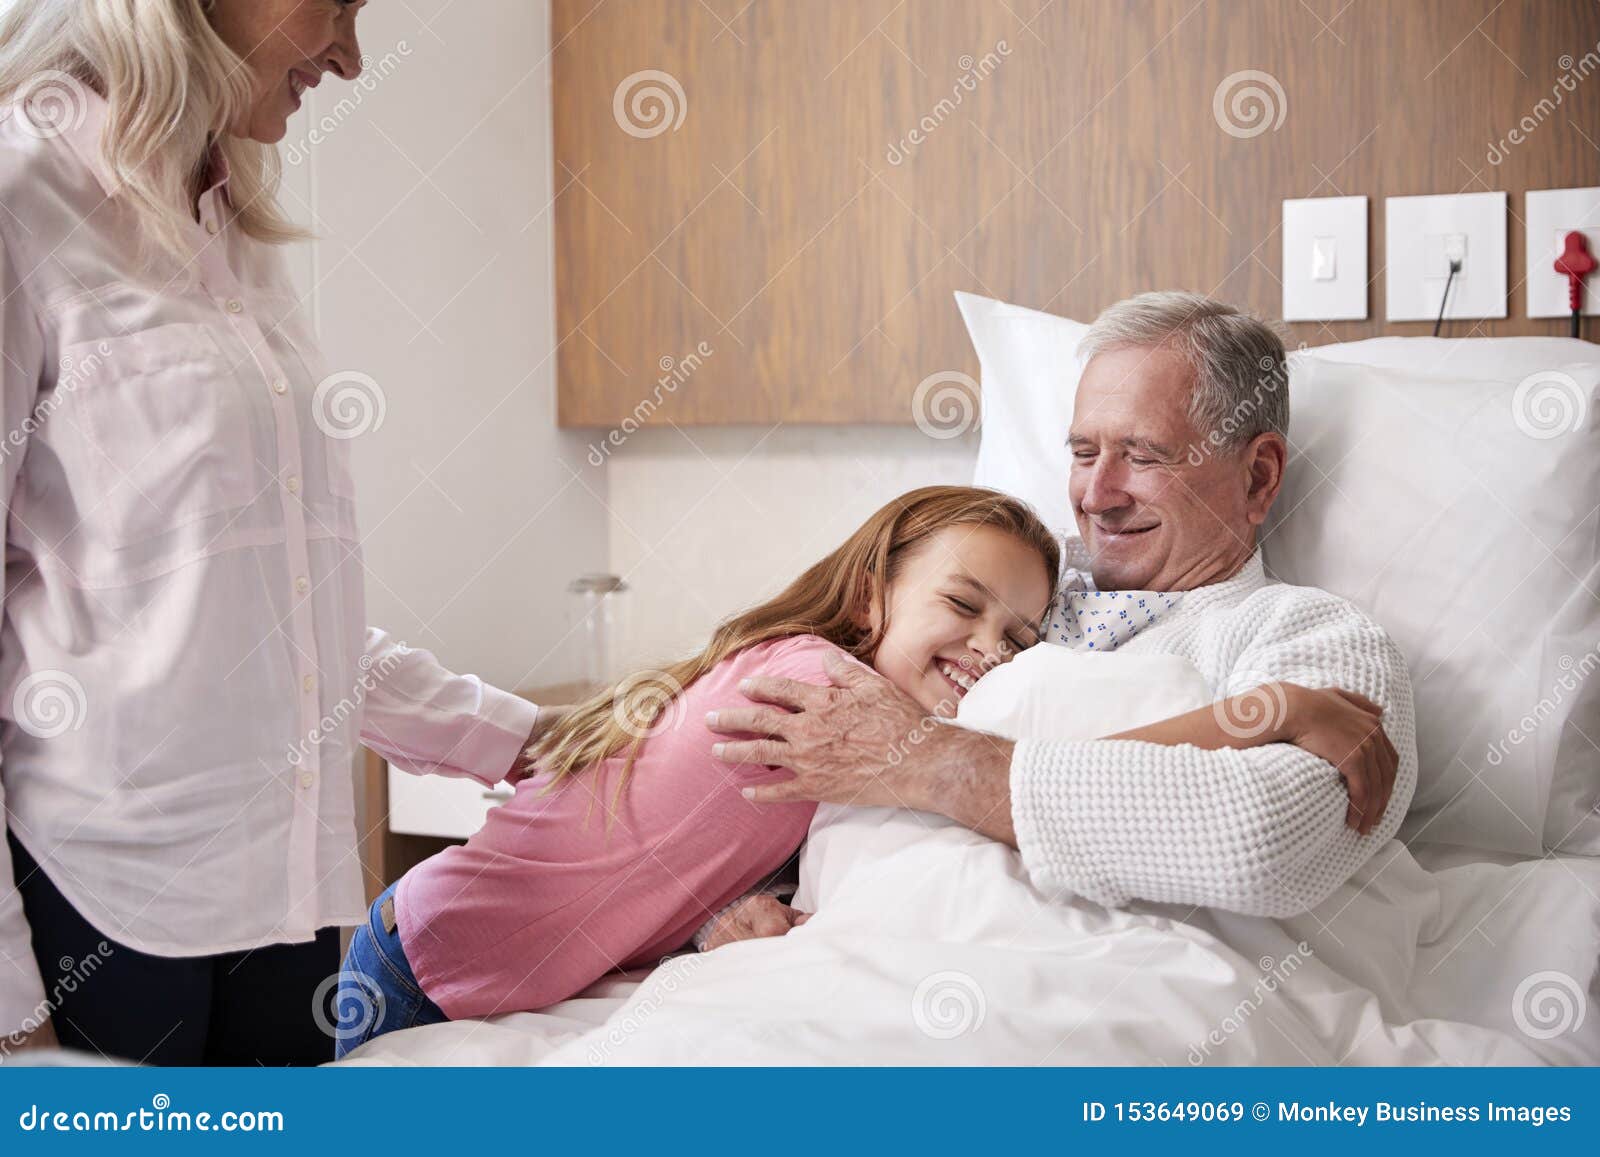 granddaughter hugging grandfather on family hospital visit